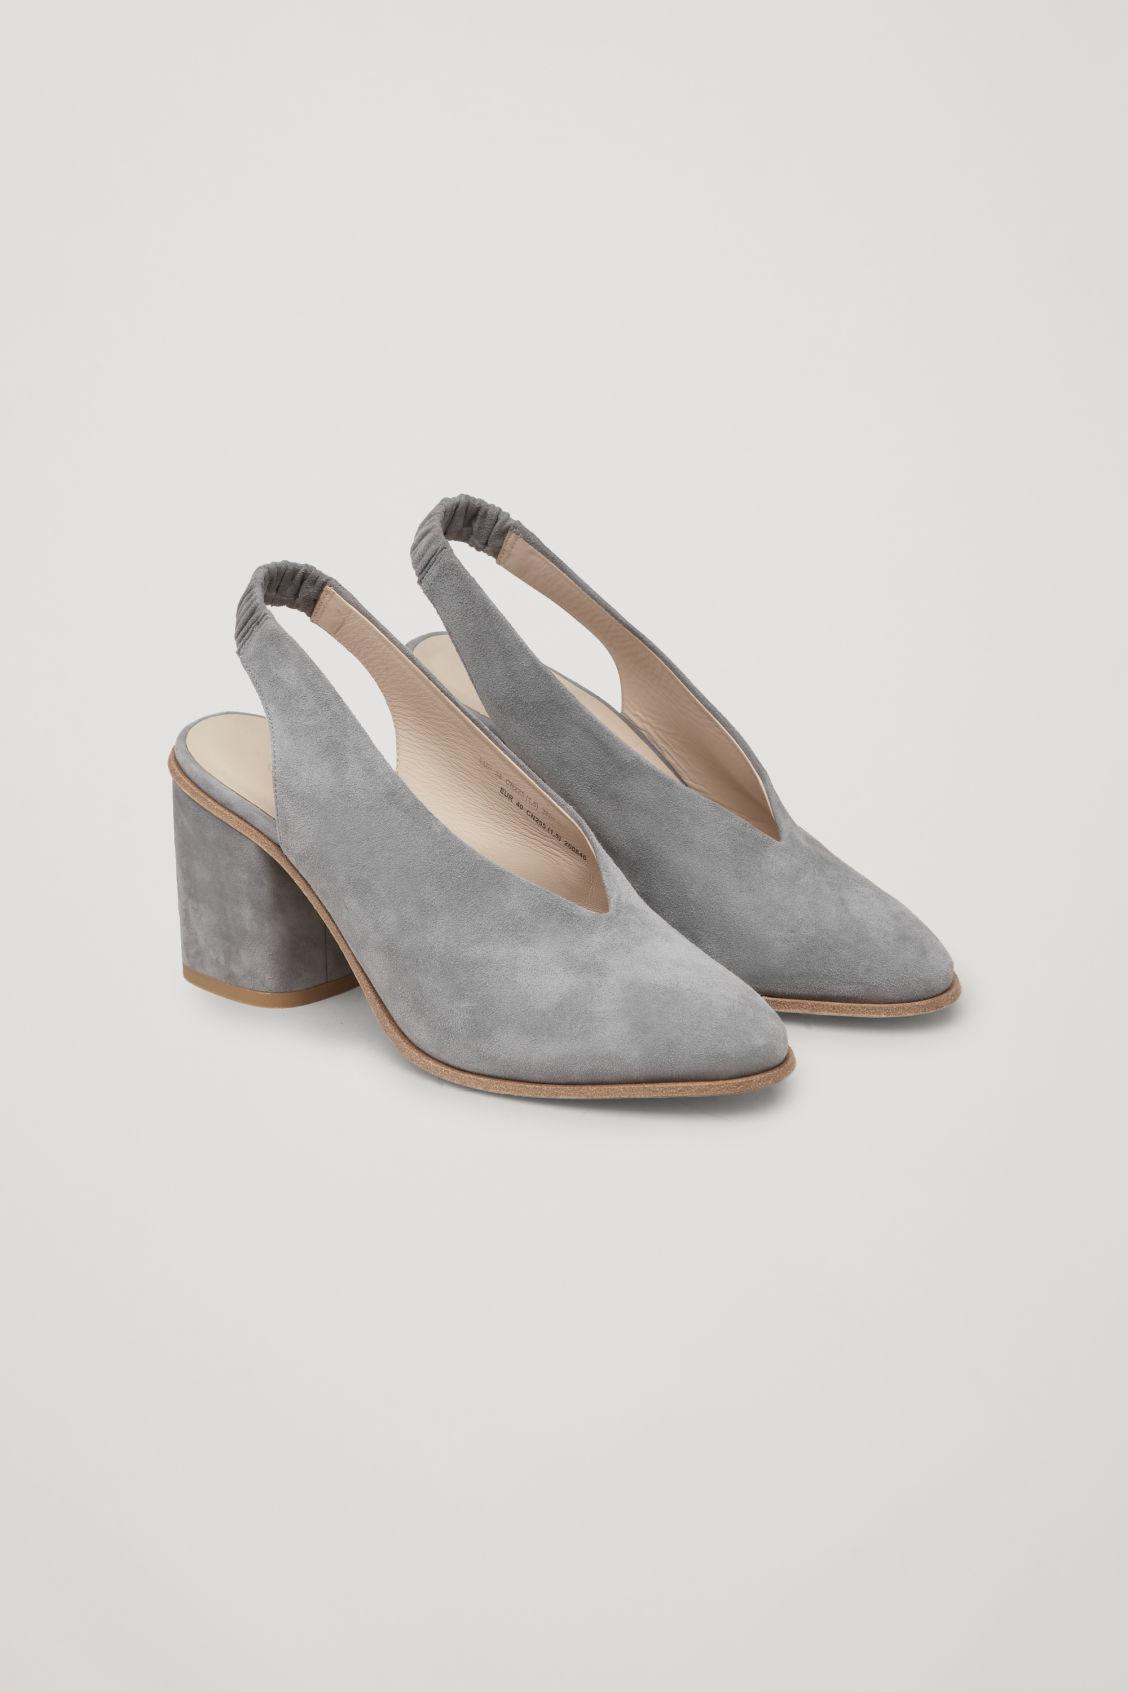 COS Suede Slingback Heels in Grey (Gray) - Lyst